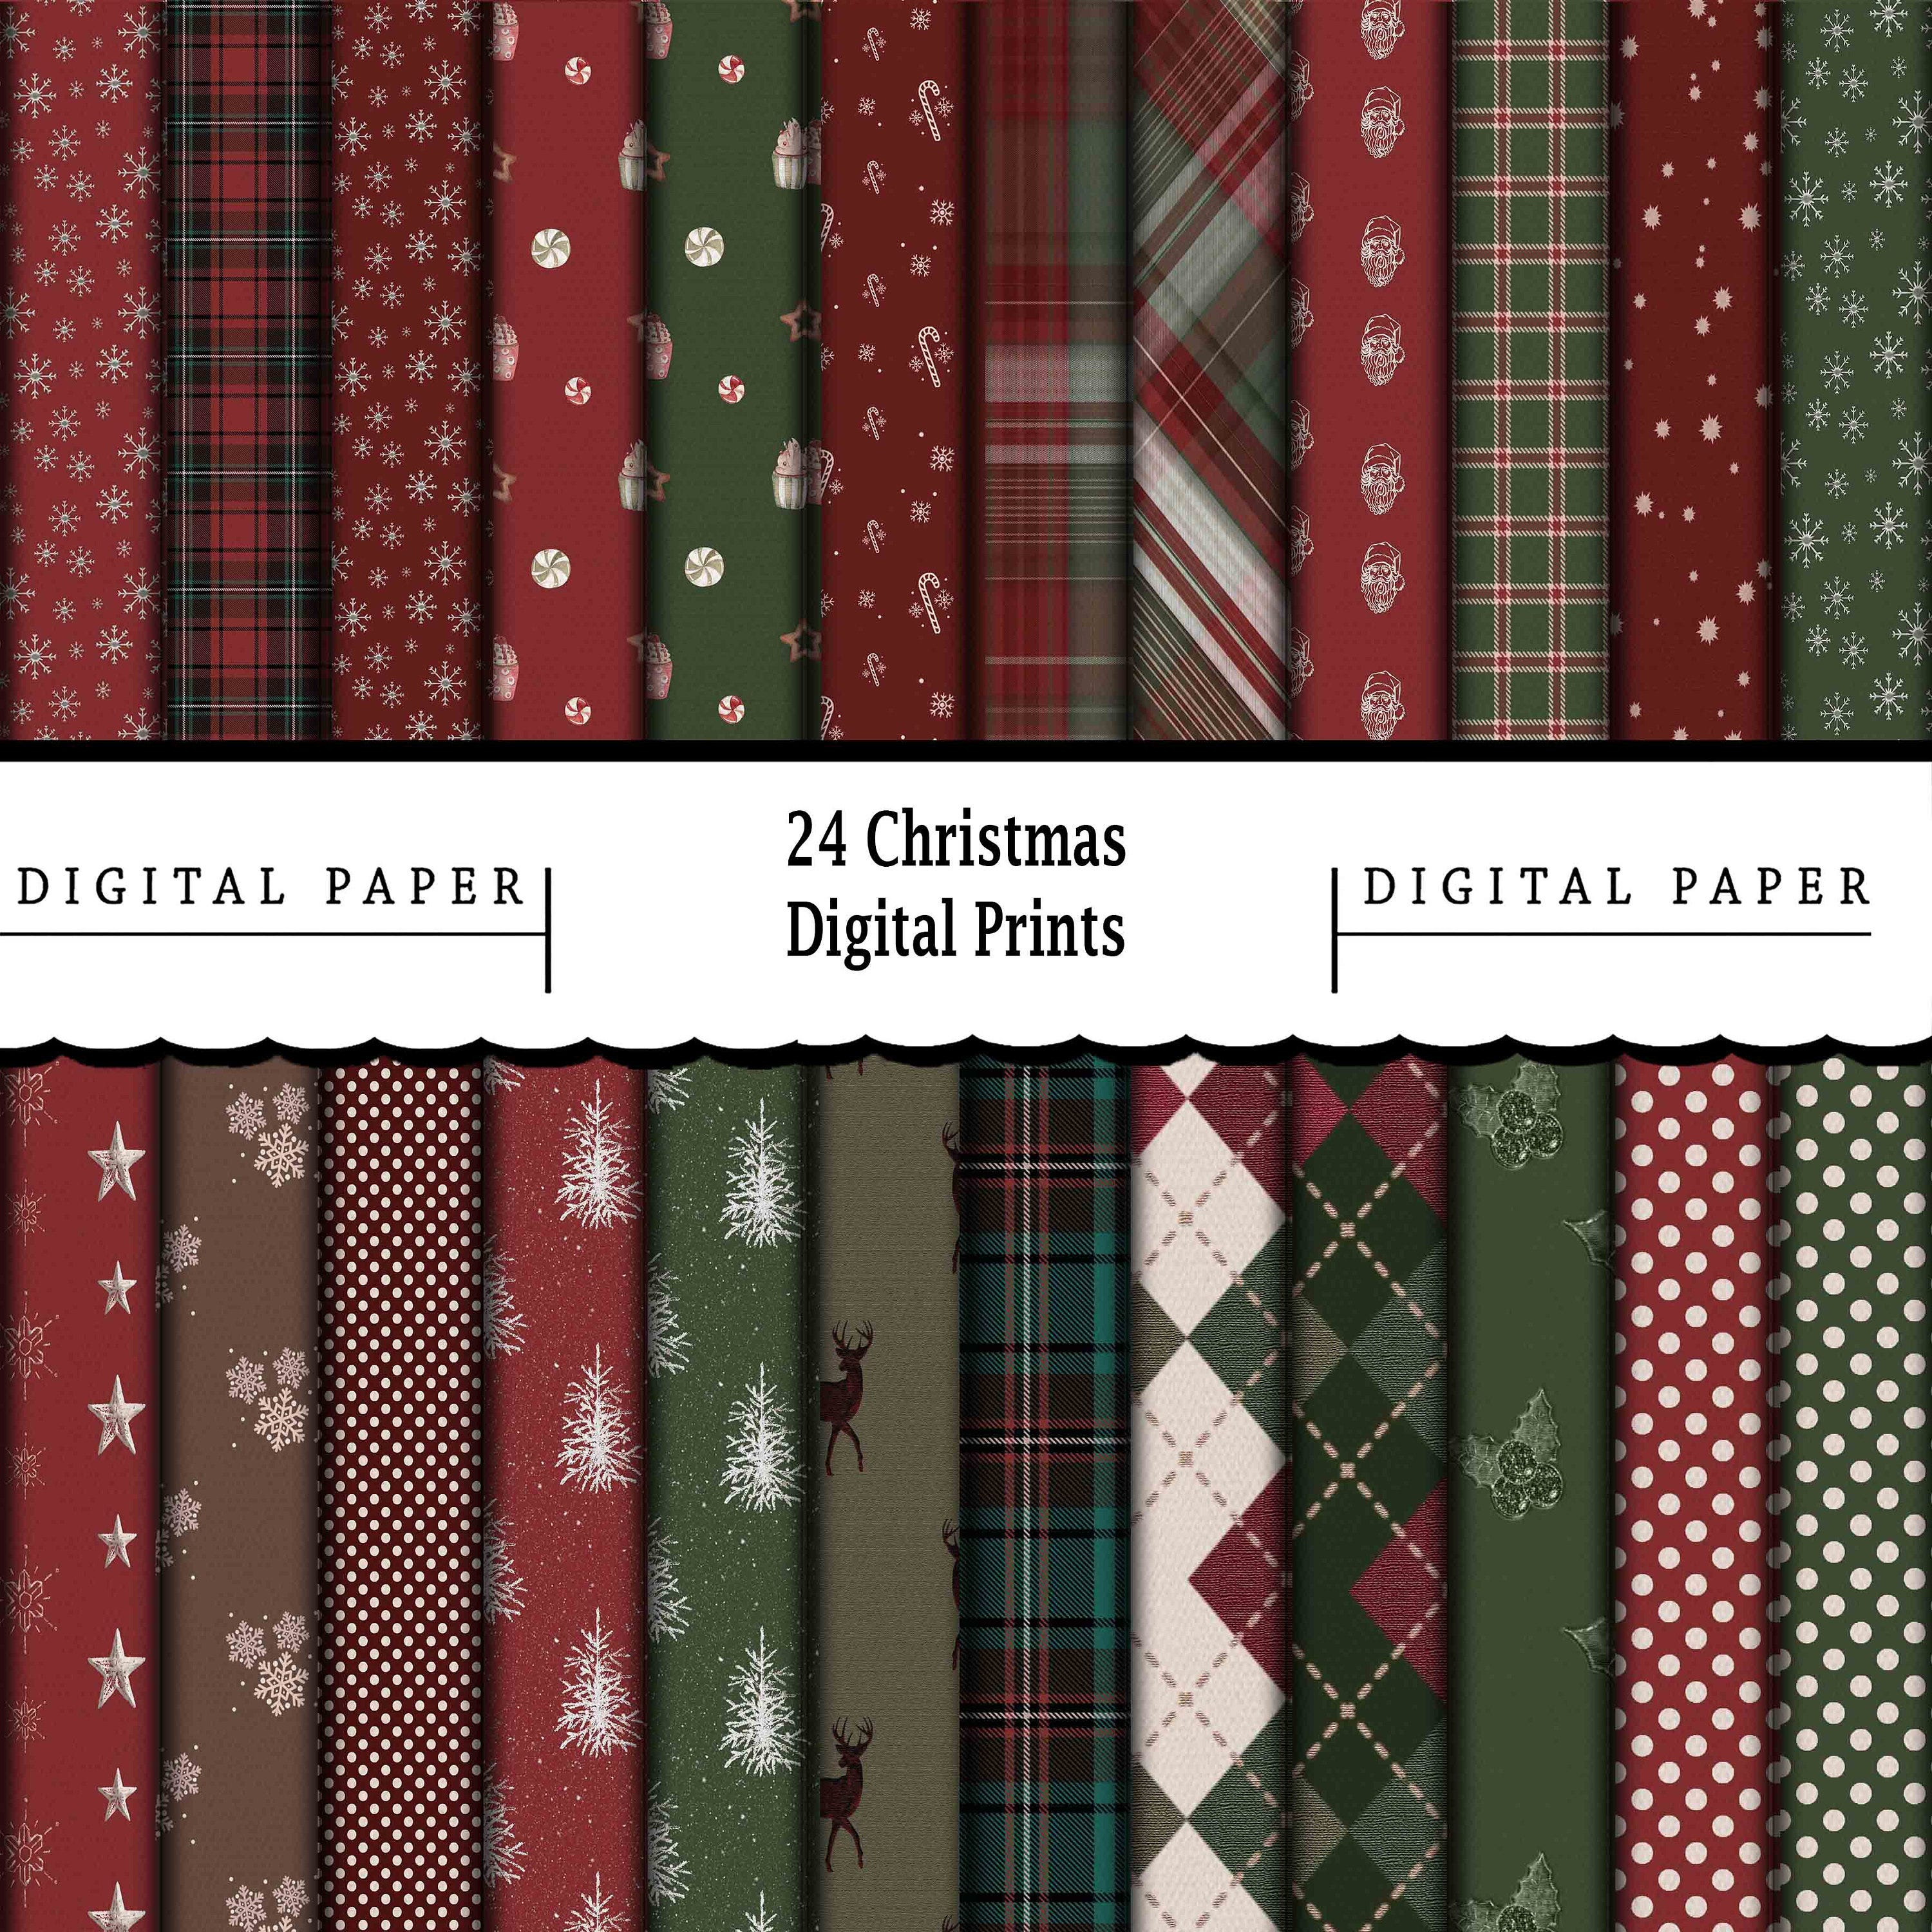 24 Digital Christmas Papers/Printable Digital Paper/Scrapbooking/Print On Demand/Wallpaper/Dolls House/Digital Prints/Merry Christmas